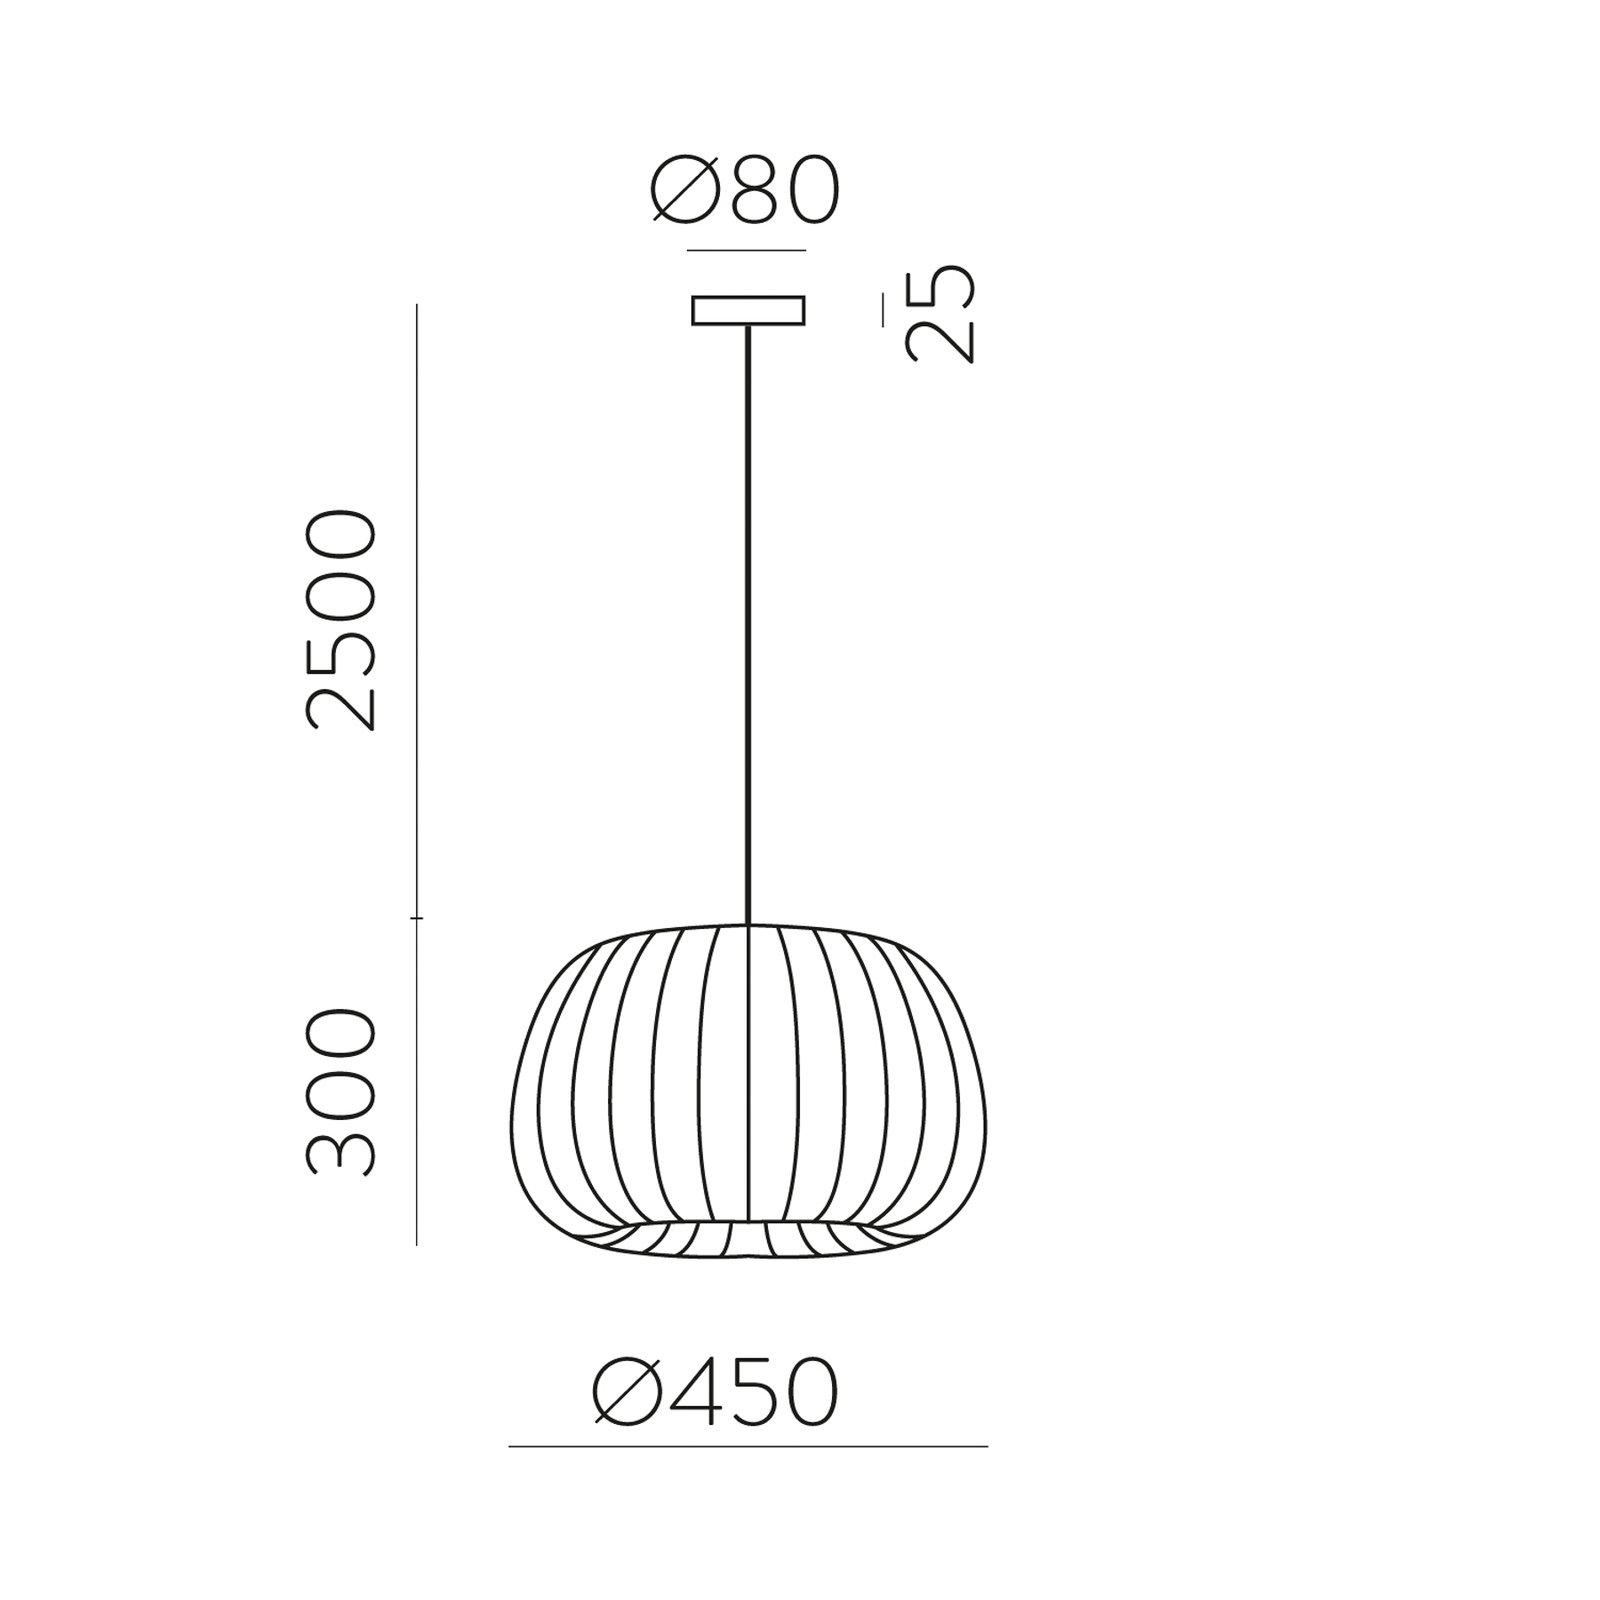 Mirta pendant light, lampshade made of acrylic struts, grey, Ø 45 cm